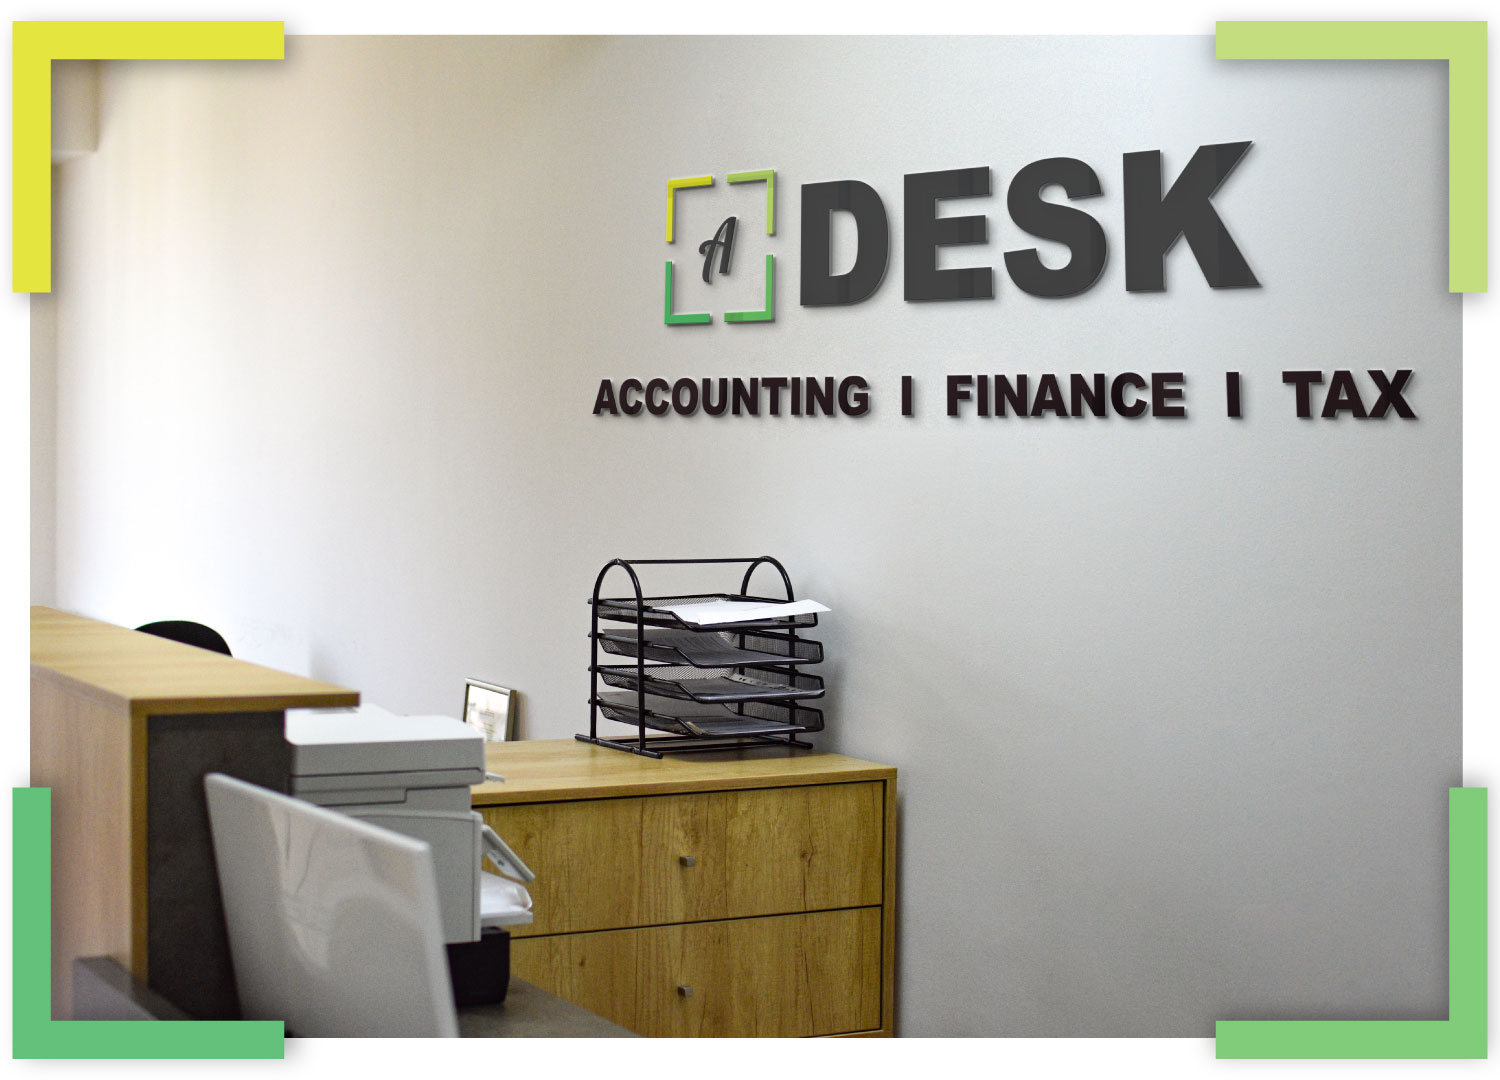 DESK - Accounting, Finance, tax